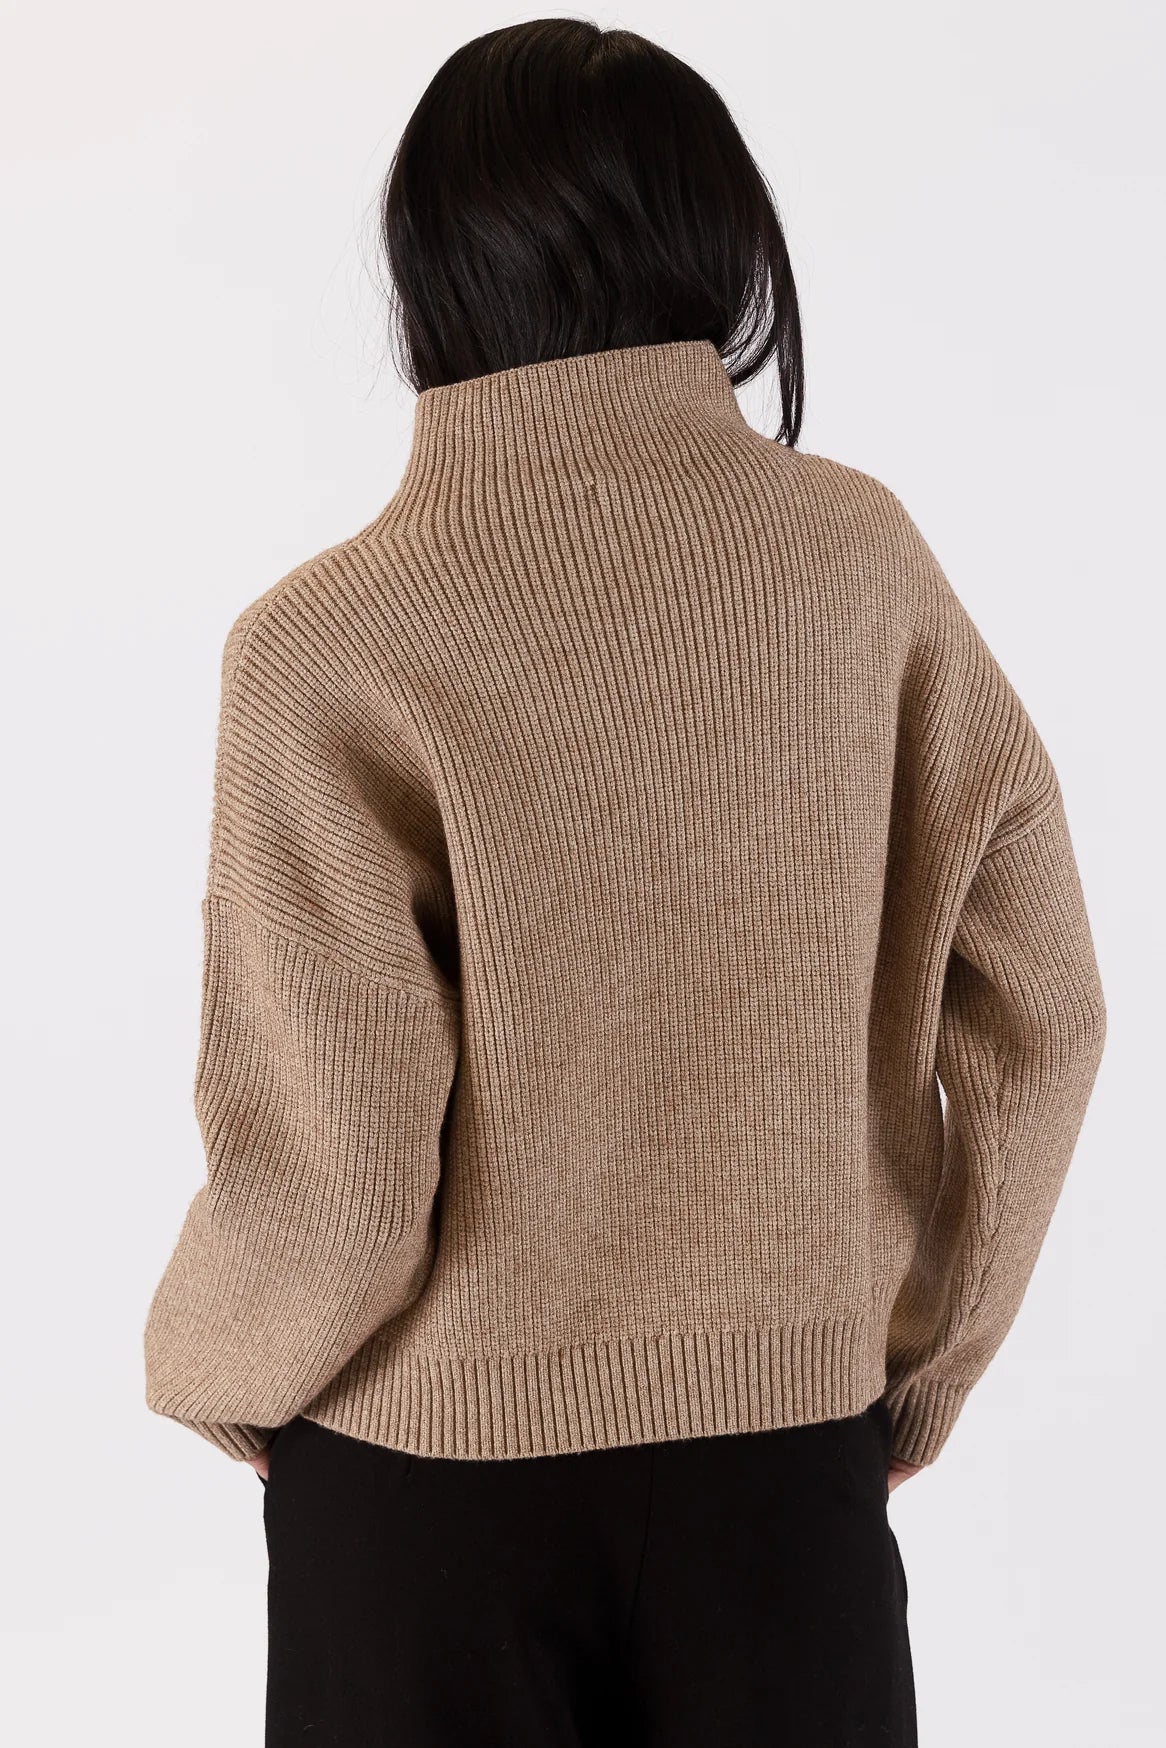 Evolet Mockneck Rib Sweater